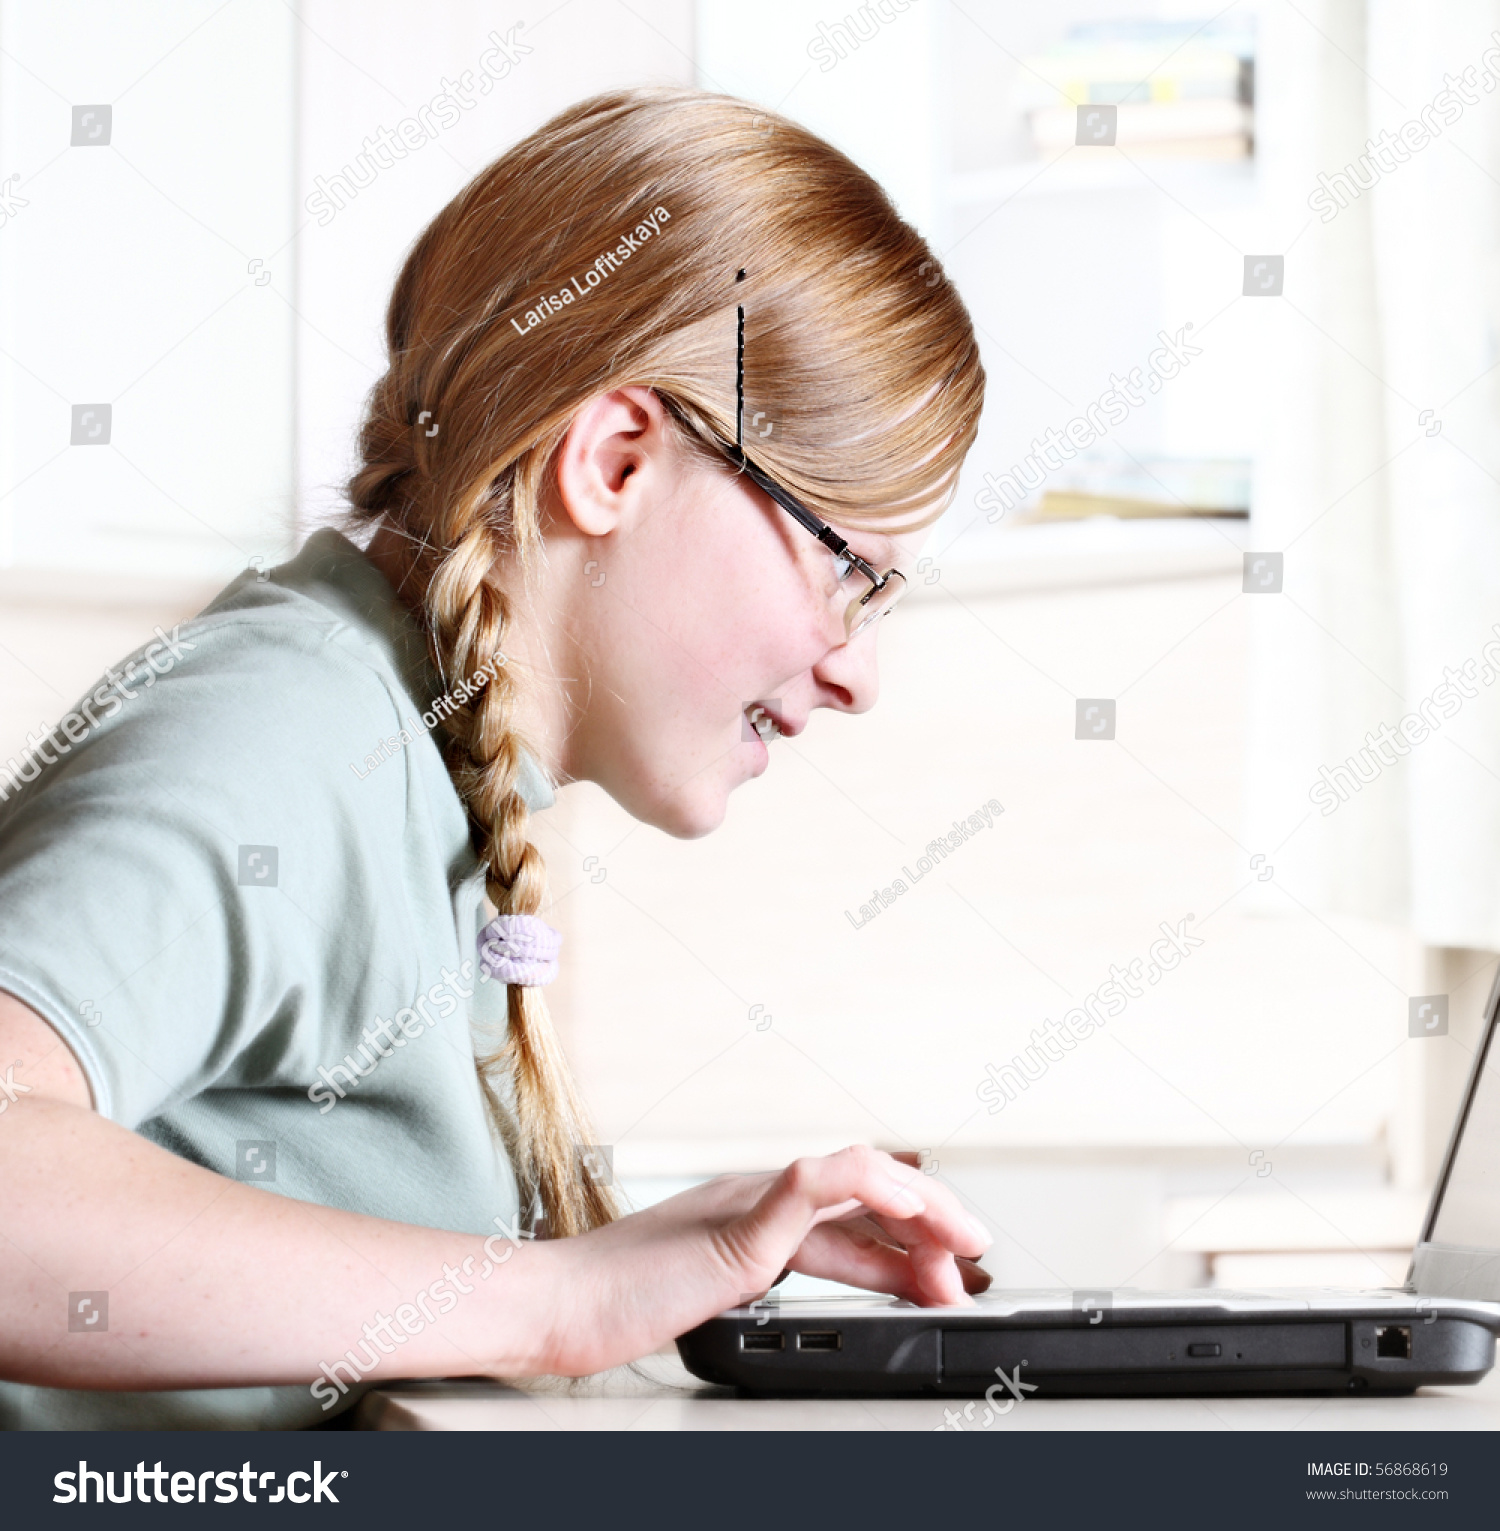 Teenage Girl Laptop Stock Photo 56868619 - Shutterstock